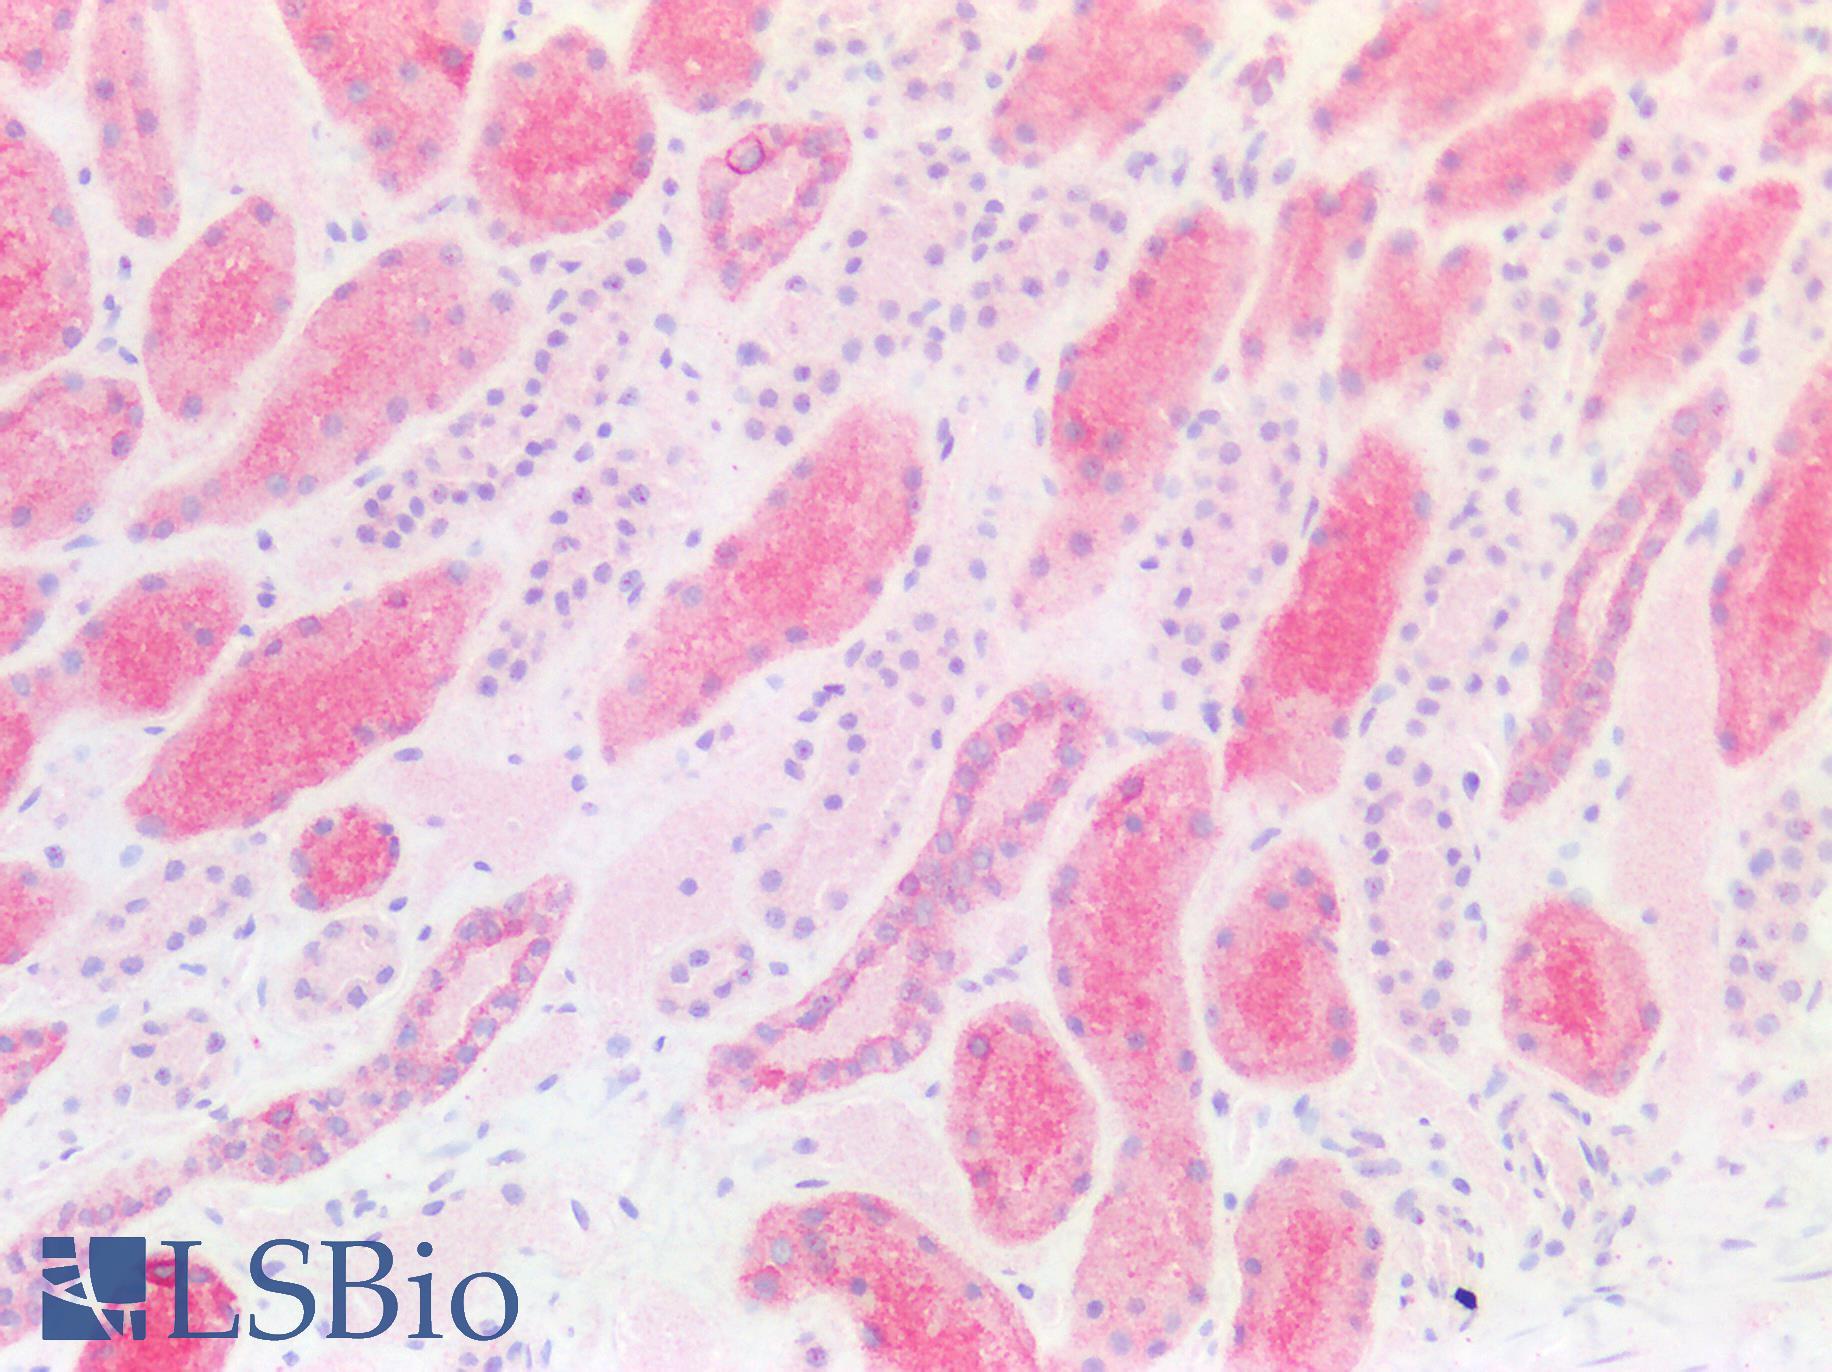 HSD3B7 Antibody - Human Kidney: Formalin-Fixed, Paraffin-Embedded (FFPE)